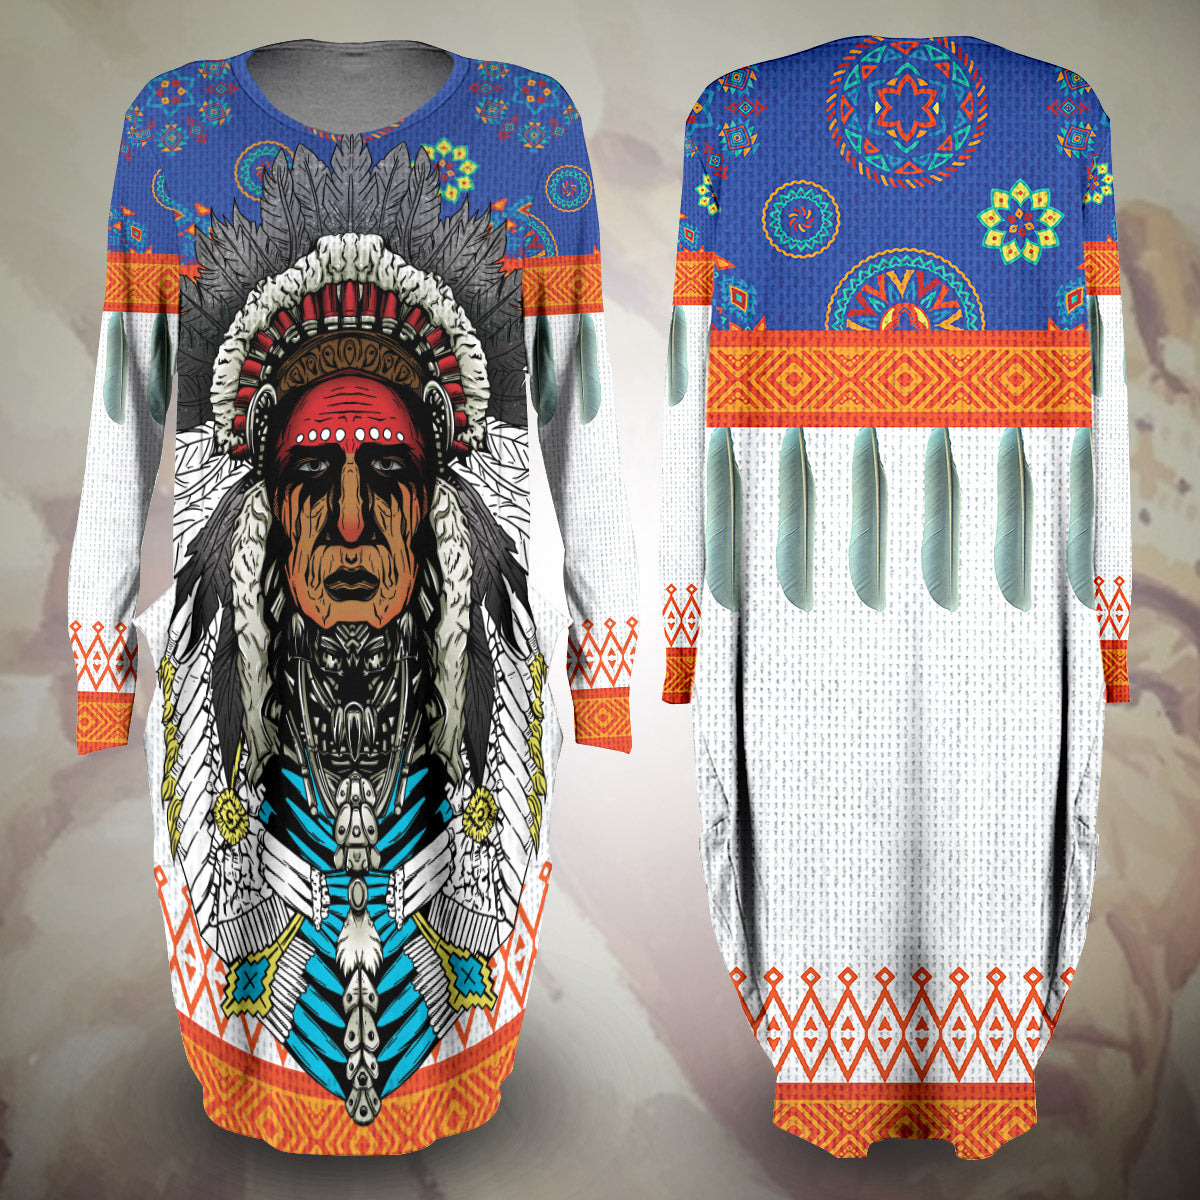 American Native Chieftain Dress